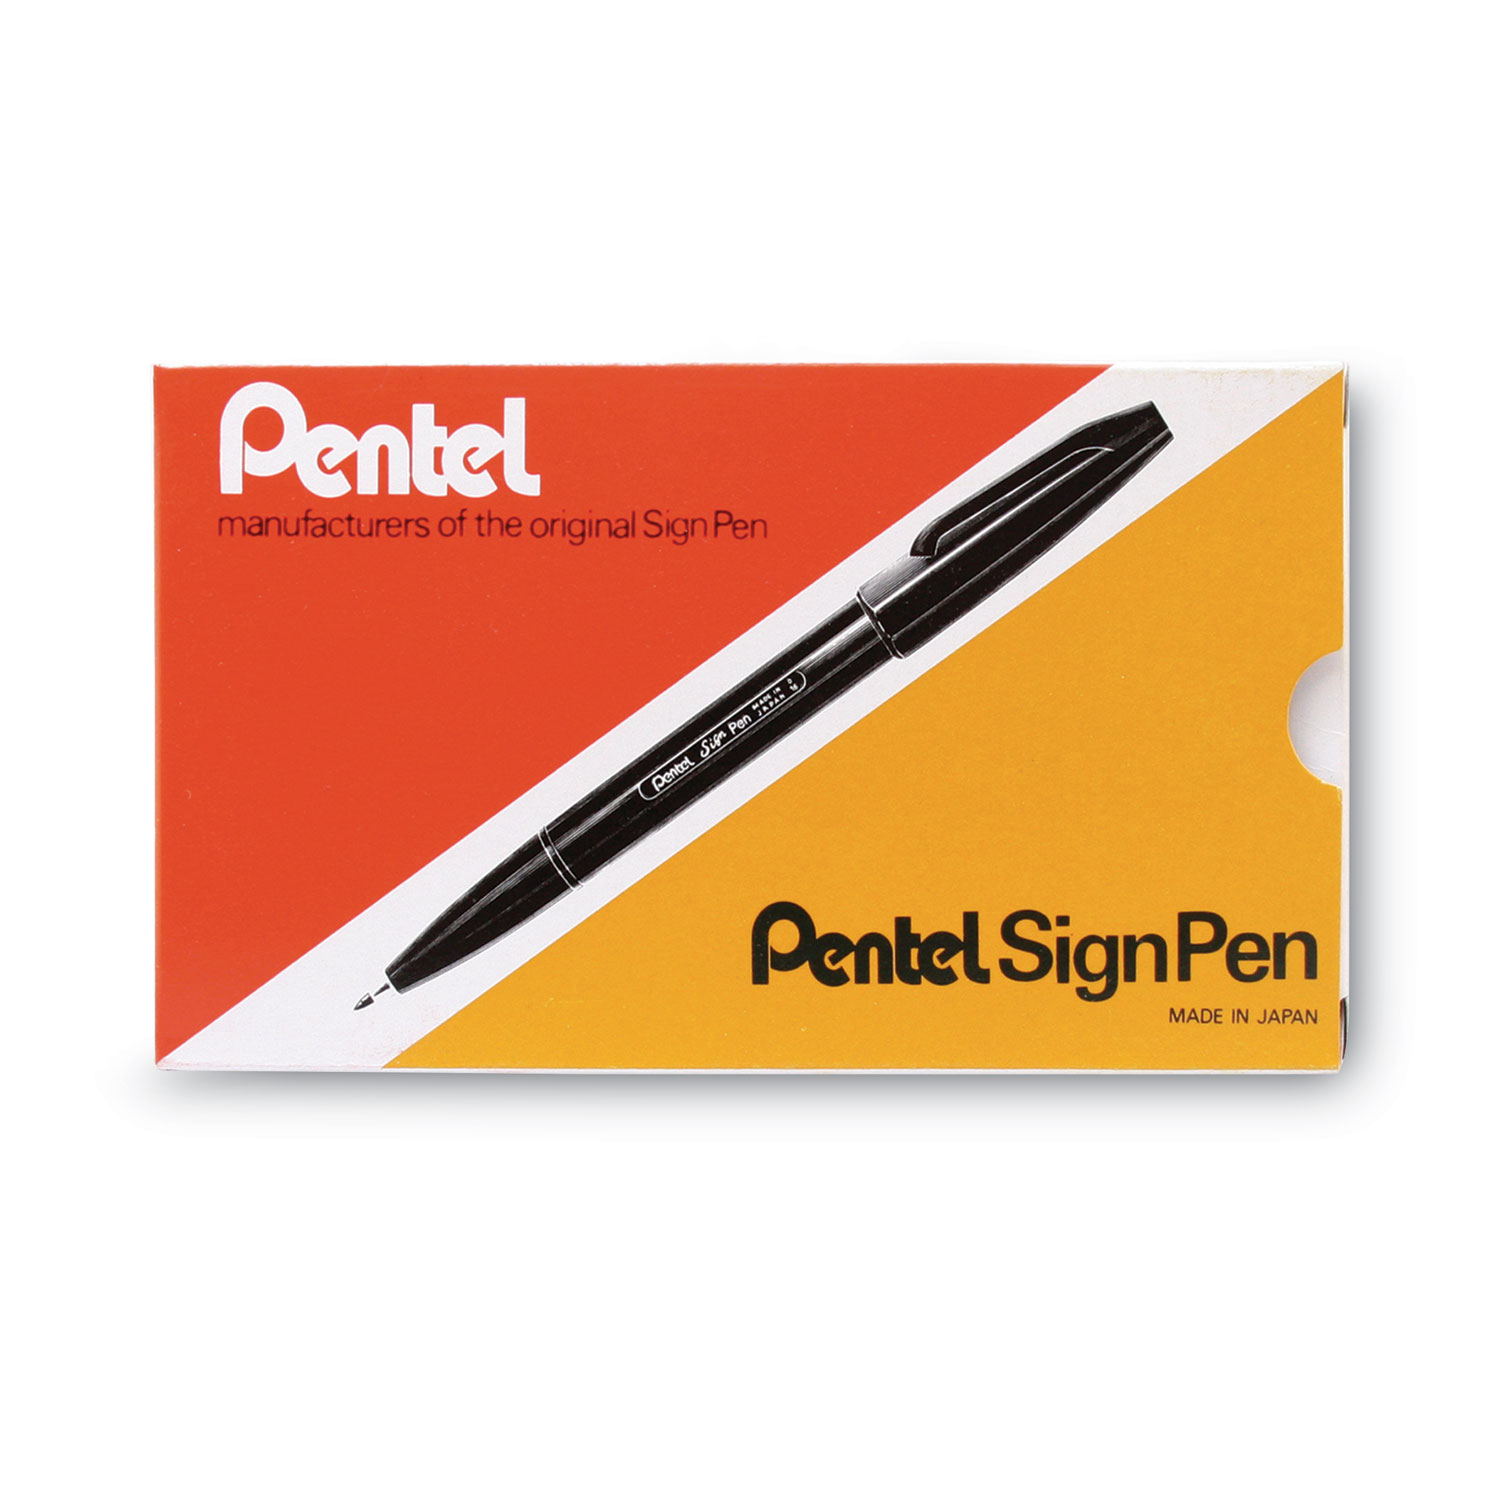 Dry Erase Marker, Pen-Style, Extra-Fine Bullet Tip, Assorted